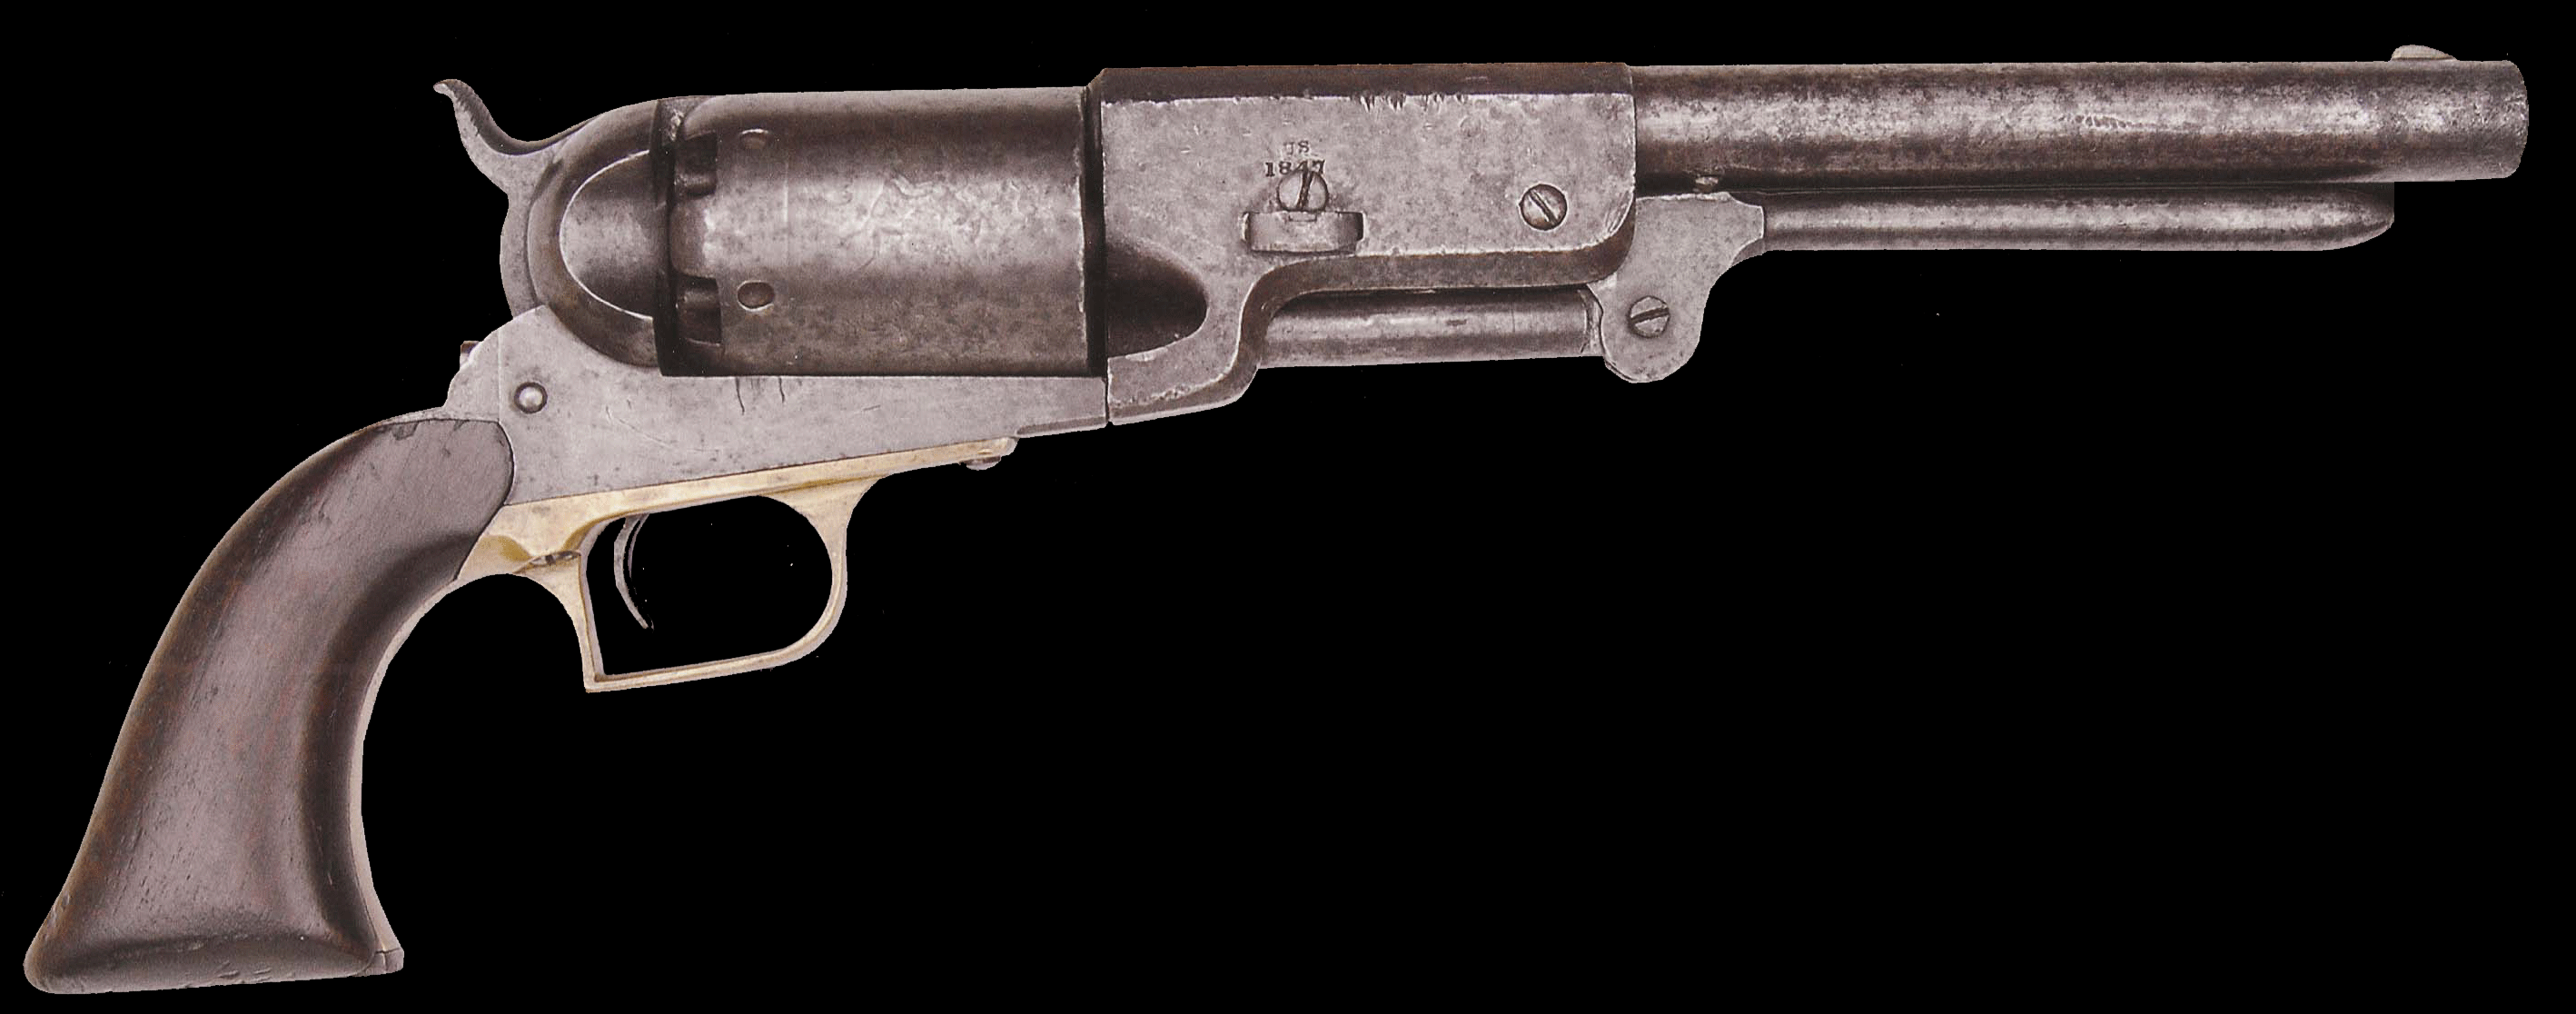 Colt Dragoon Revolver Backgrounds, Compatible - PC, Mobile, Gadgets| 2836x1116 px